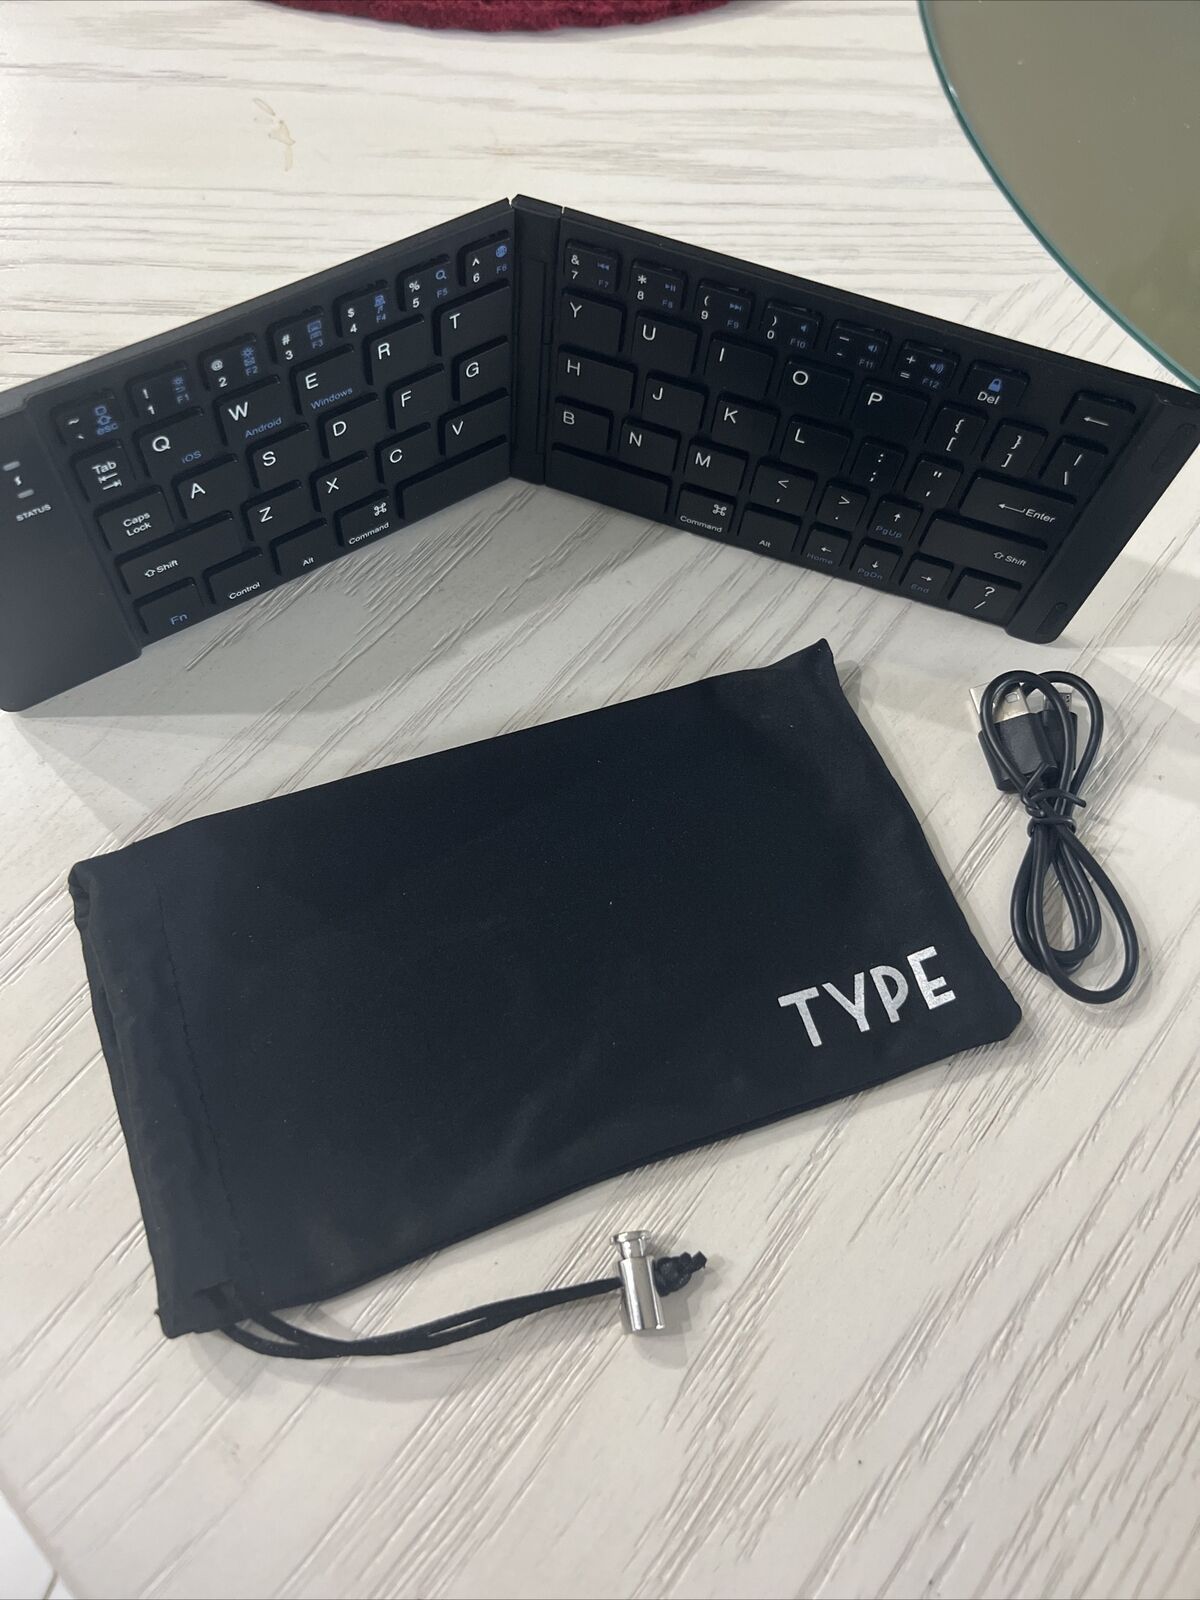 NIB SEALED🎱 FashionIt Type Wireless Keyboard Foldable Pocket Sz Bluetooth Black